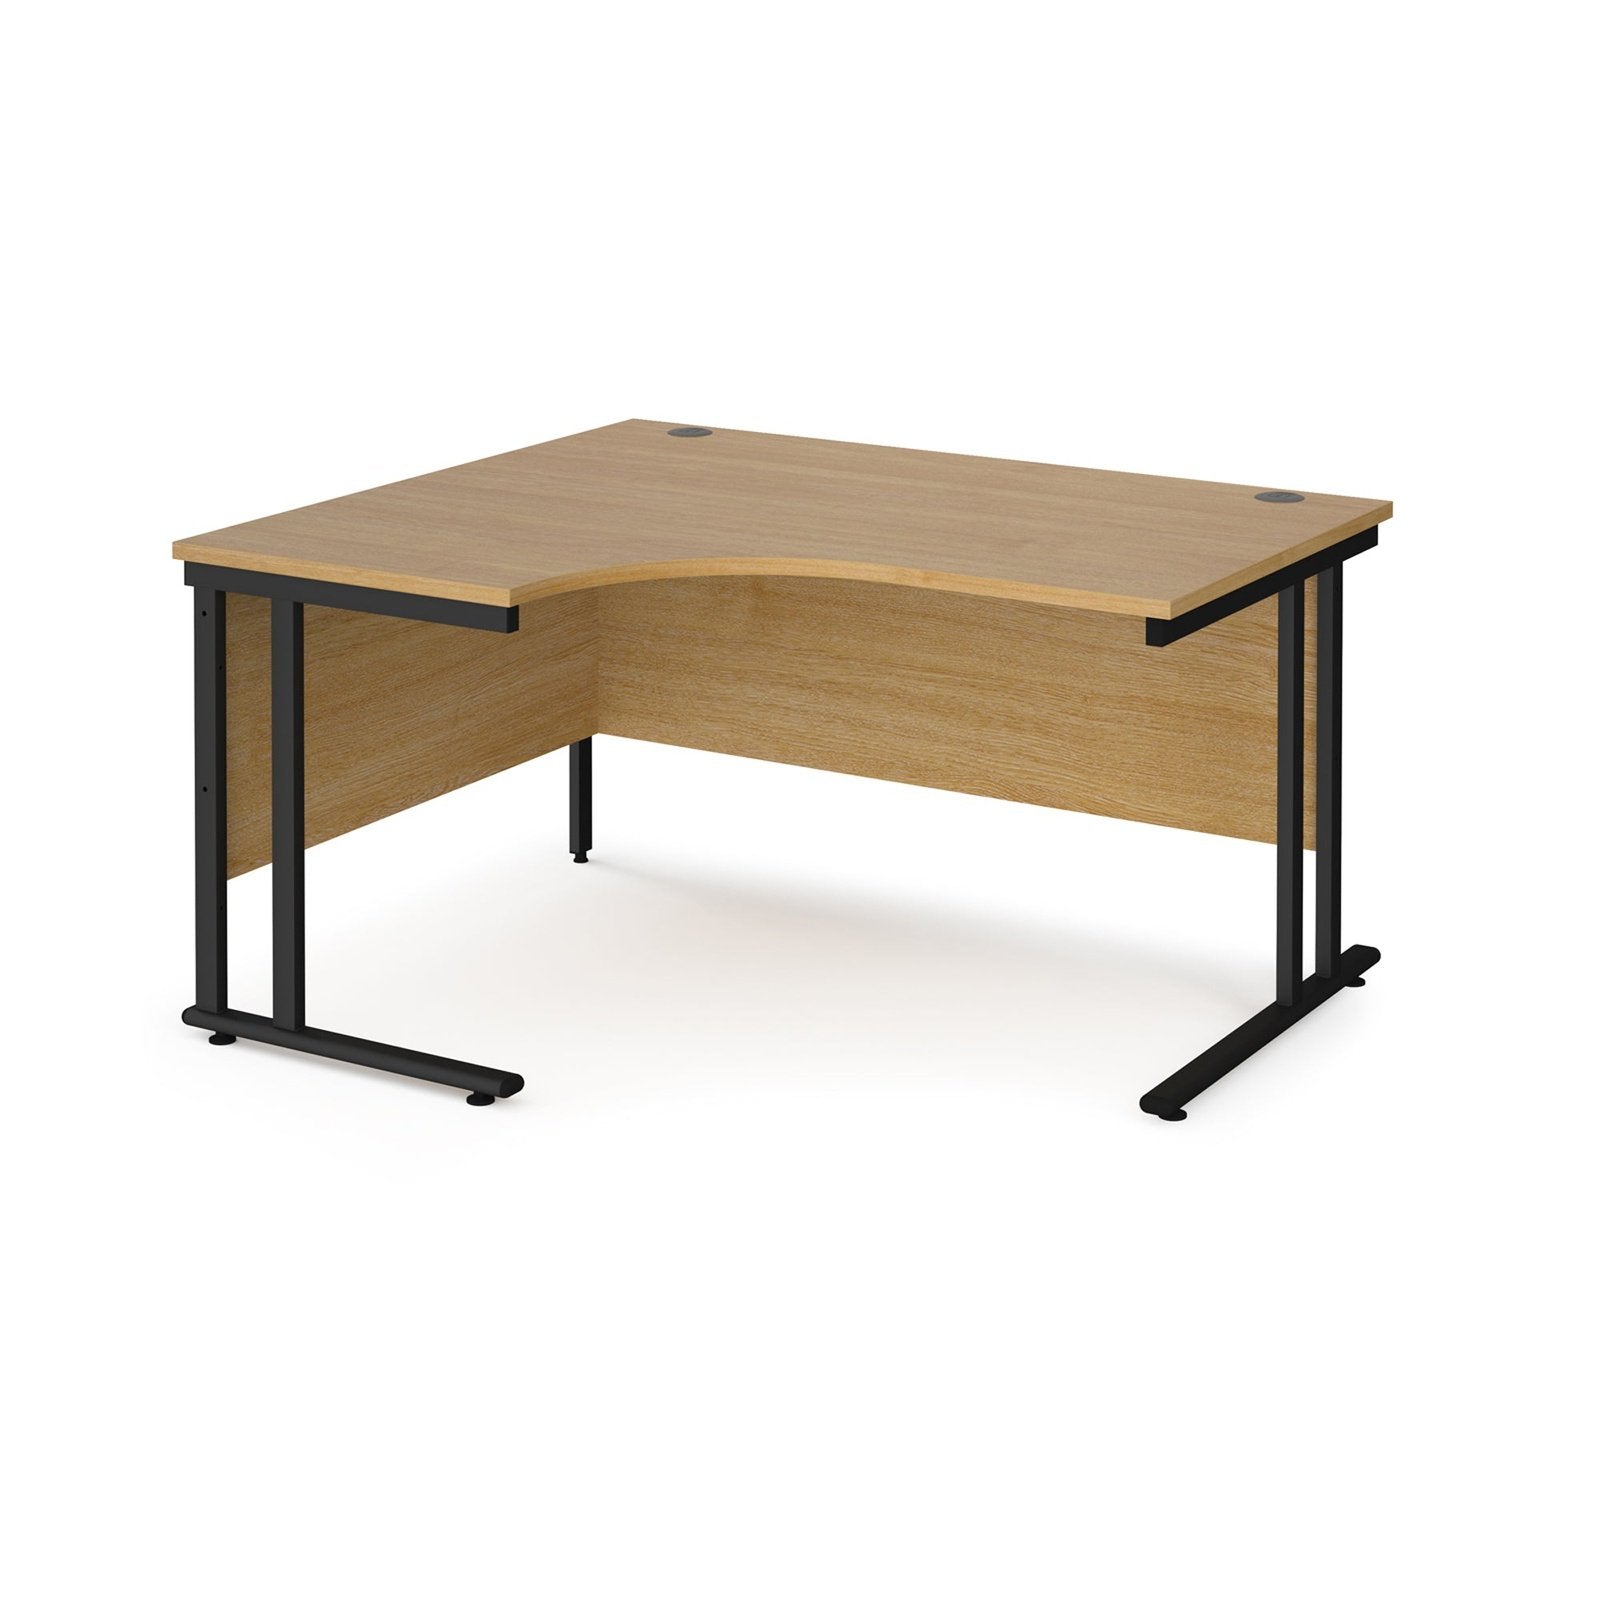 Maestro 25 cantilever leg left hand ergonomic desk - Office Products Online